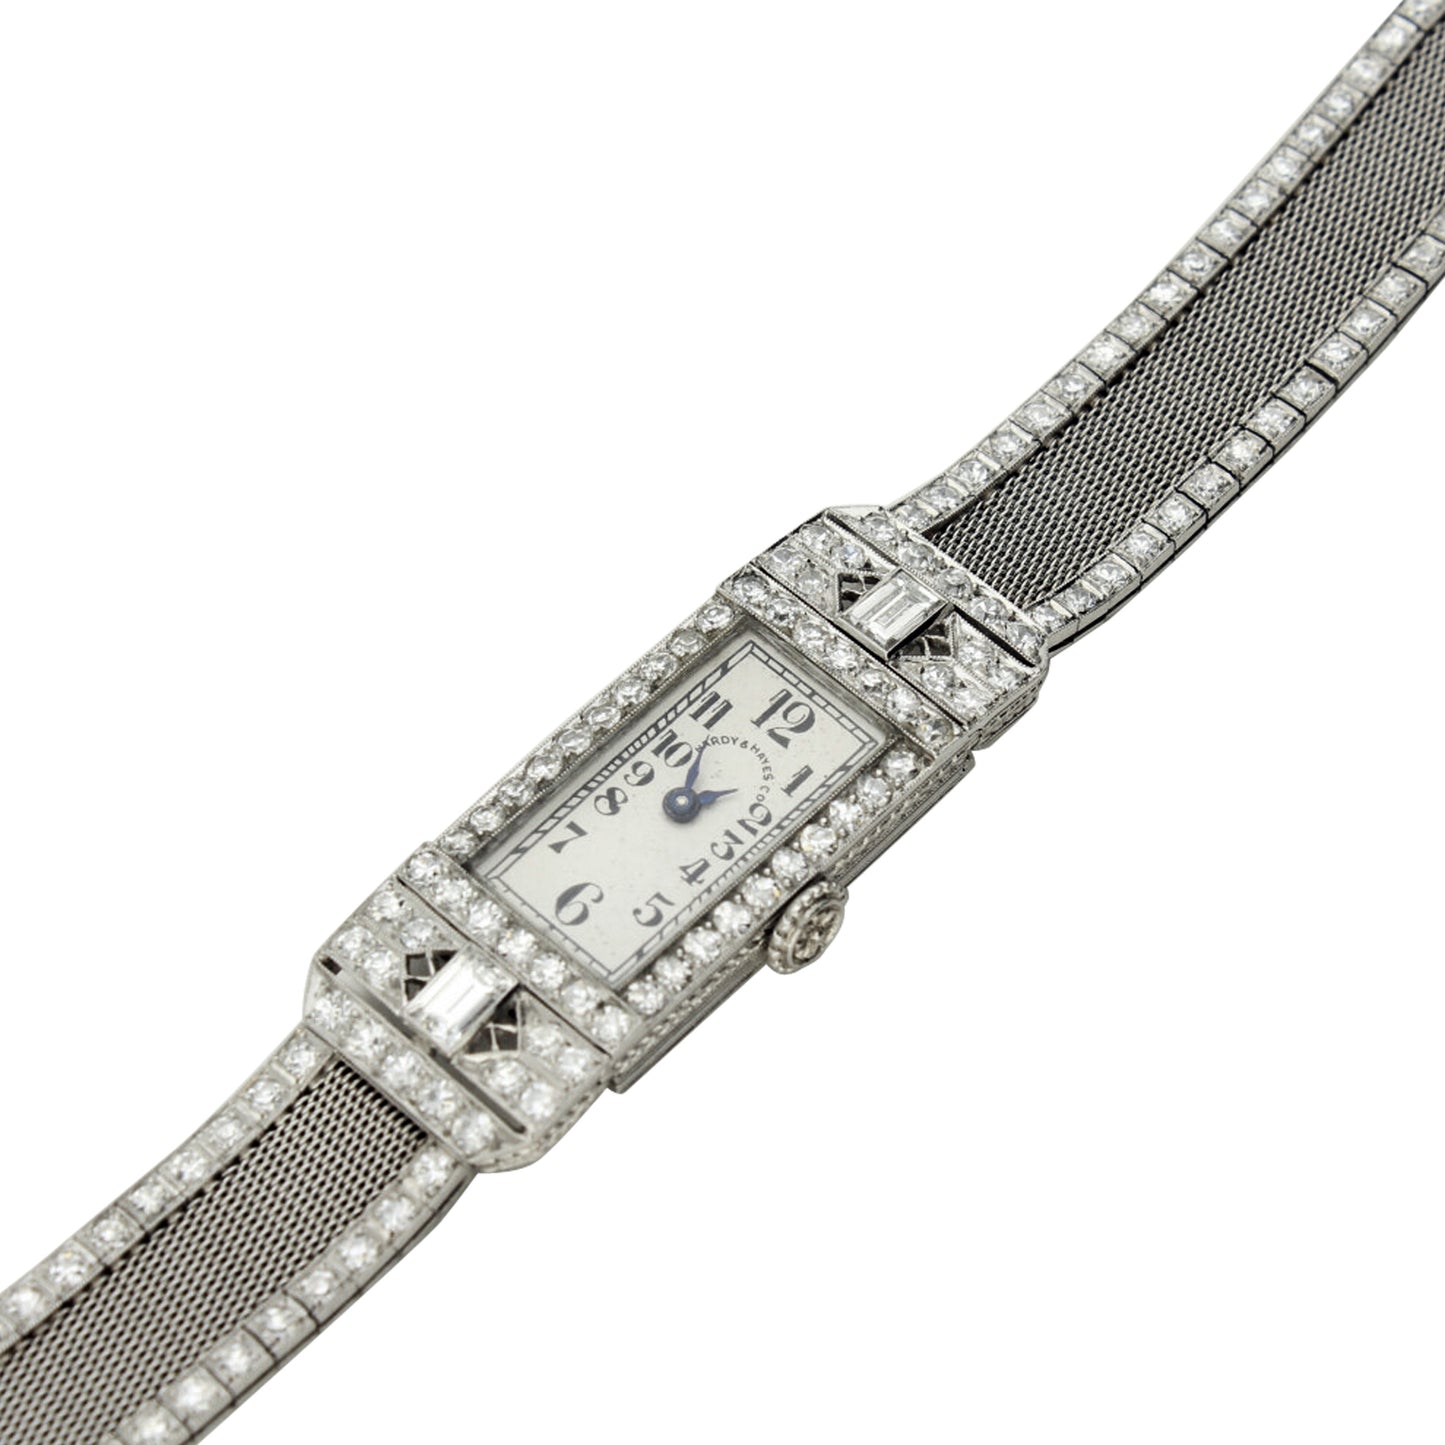 Platinum and diamond set Vacheron & Constantin bracelet watch. Made 1930's